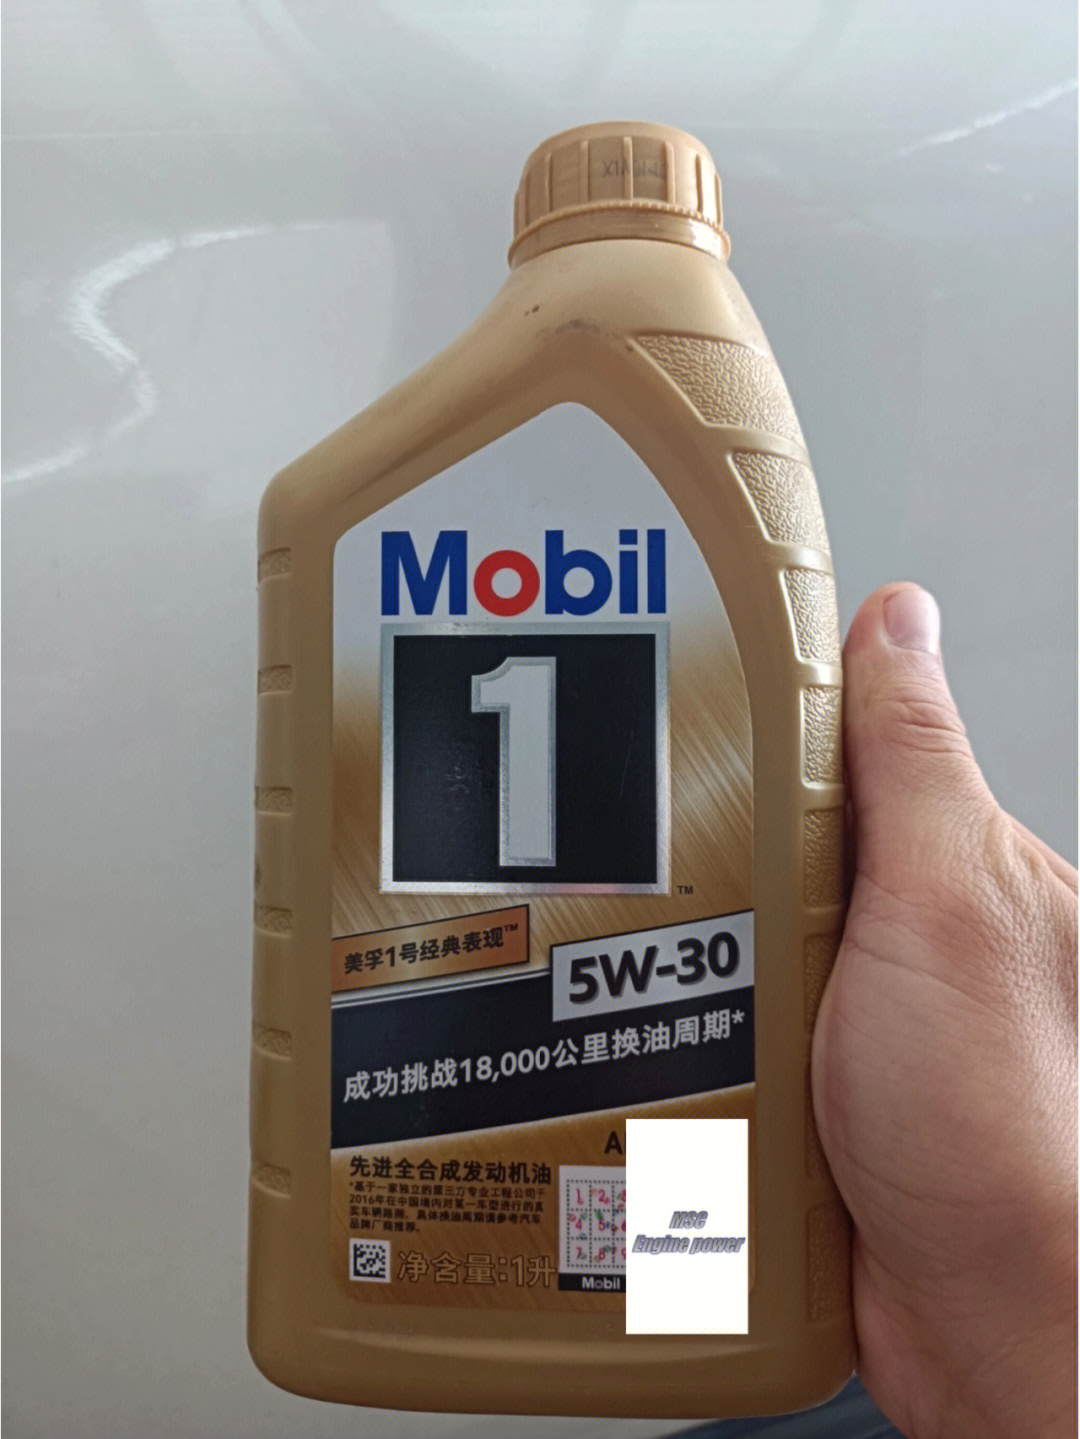 5l(2gr fks发动机)机油适用粘度:5w30机油品牌:金美孚一号sp 5w30机油